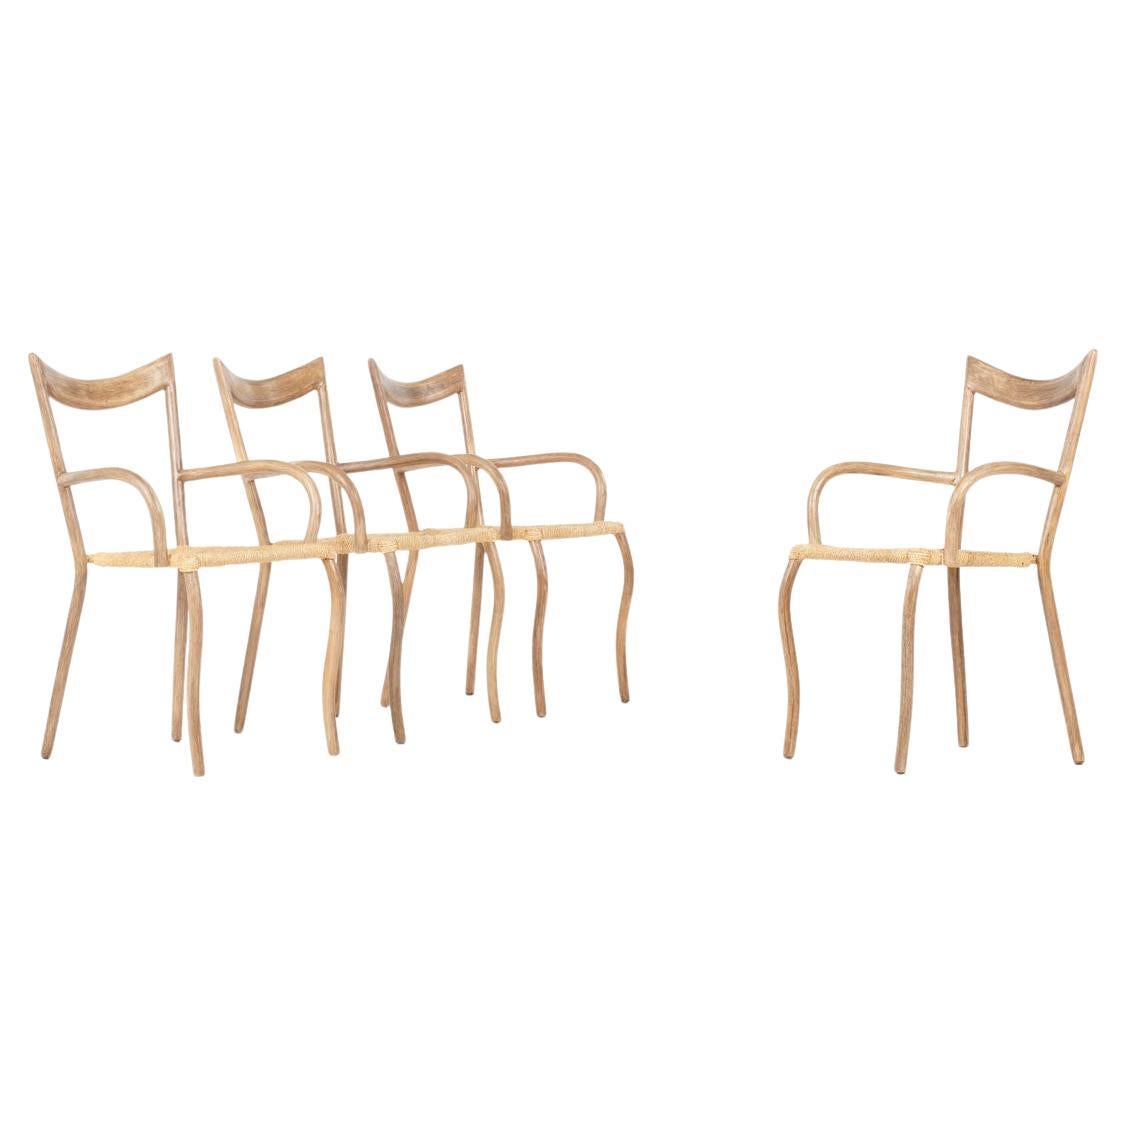 Set of 4 Manila chairs by Val Padilla for Jasper Conran 1970